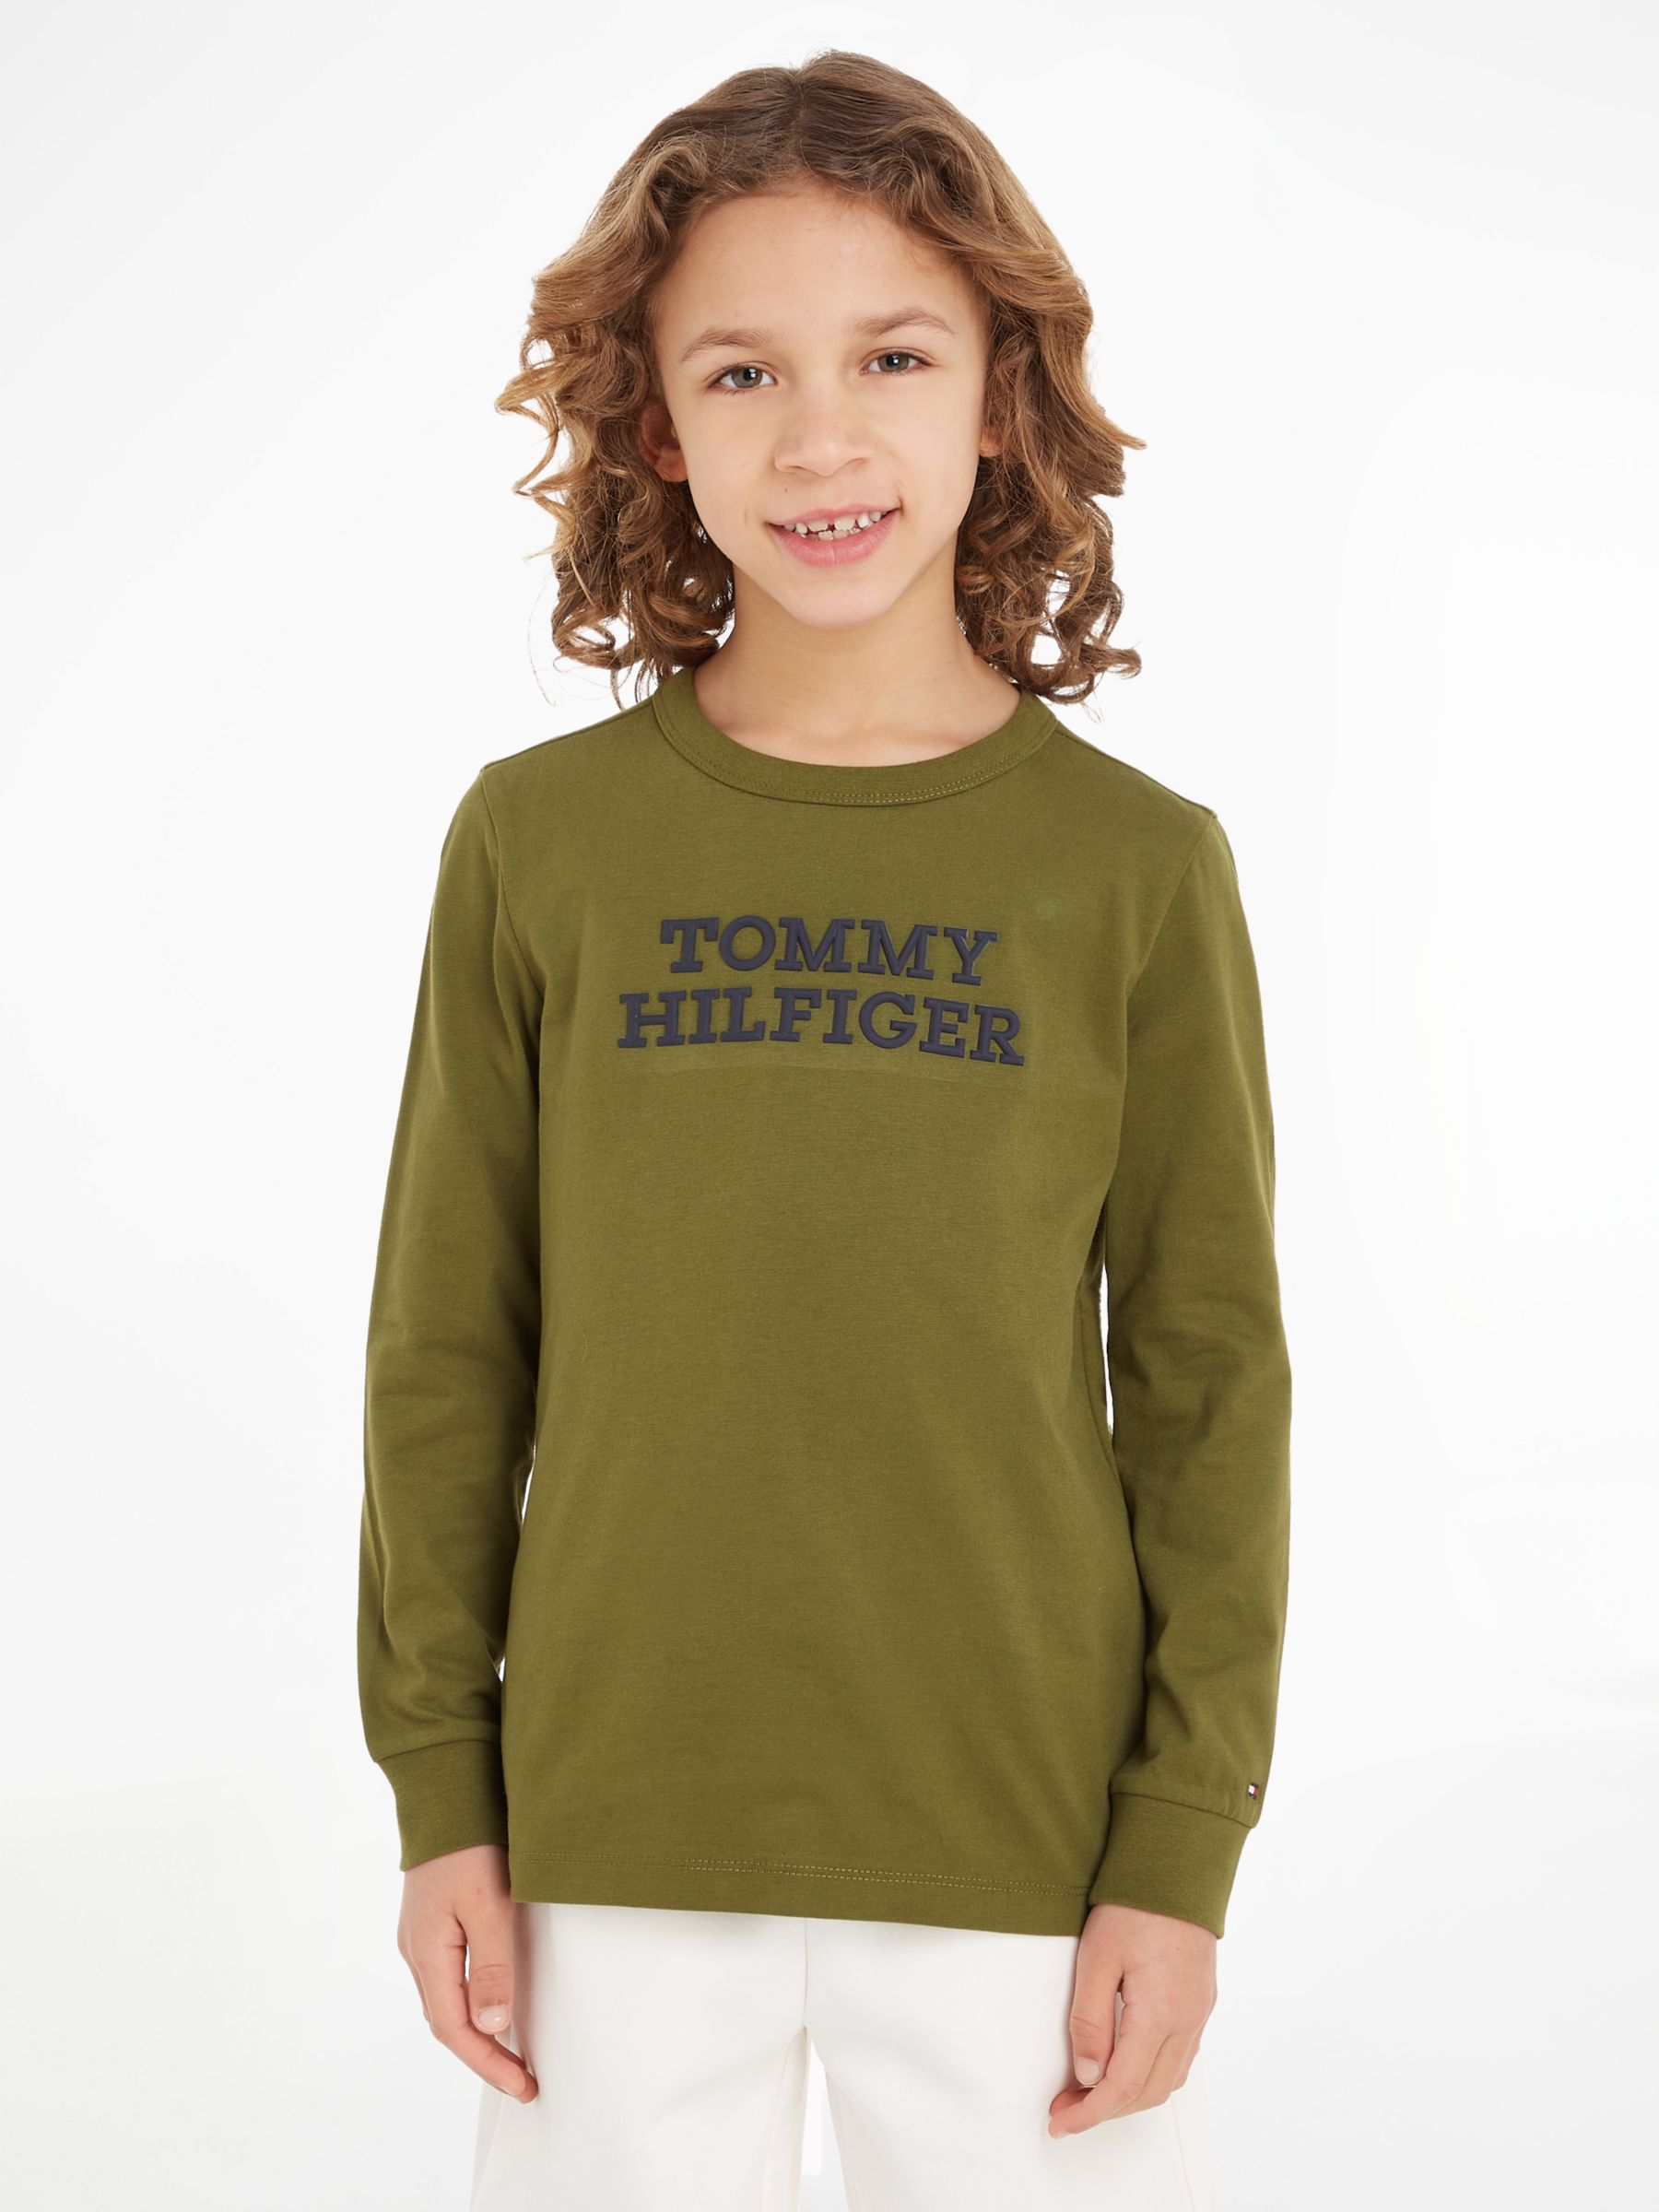 Putting Tommy T-Shirt, Kids\' Long 3 Logo years Sleeve Hilfiger Green, Raised